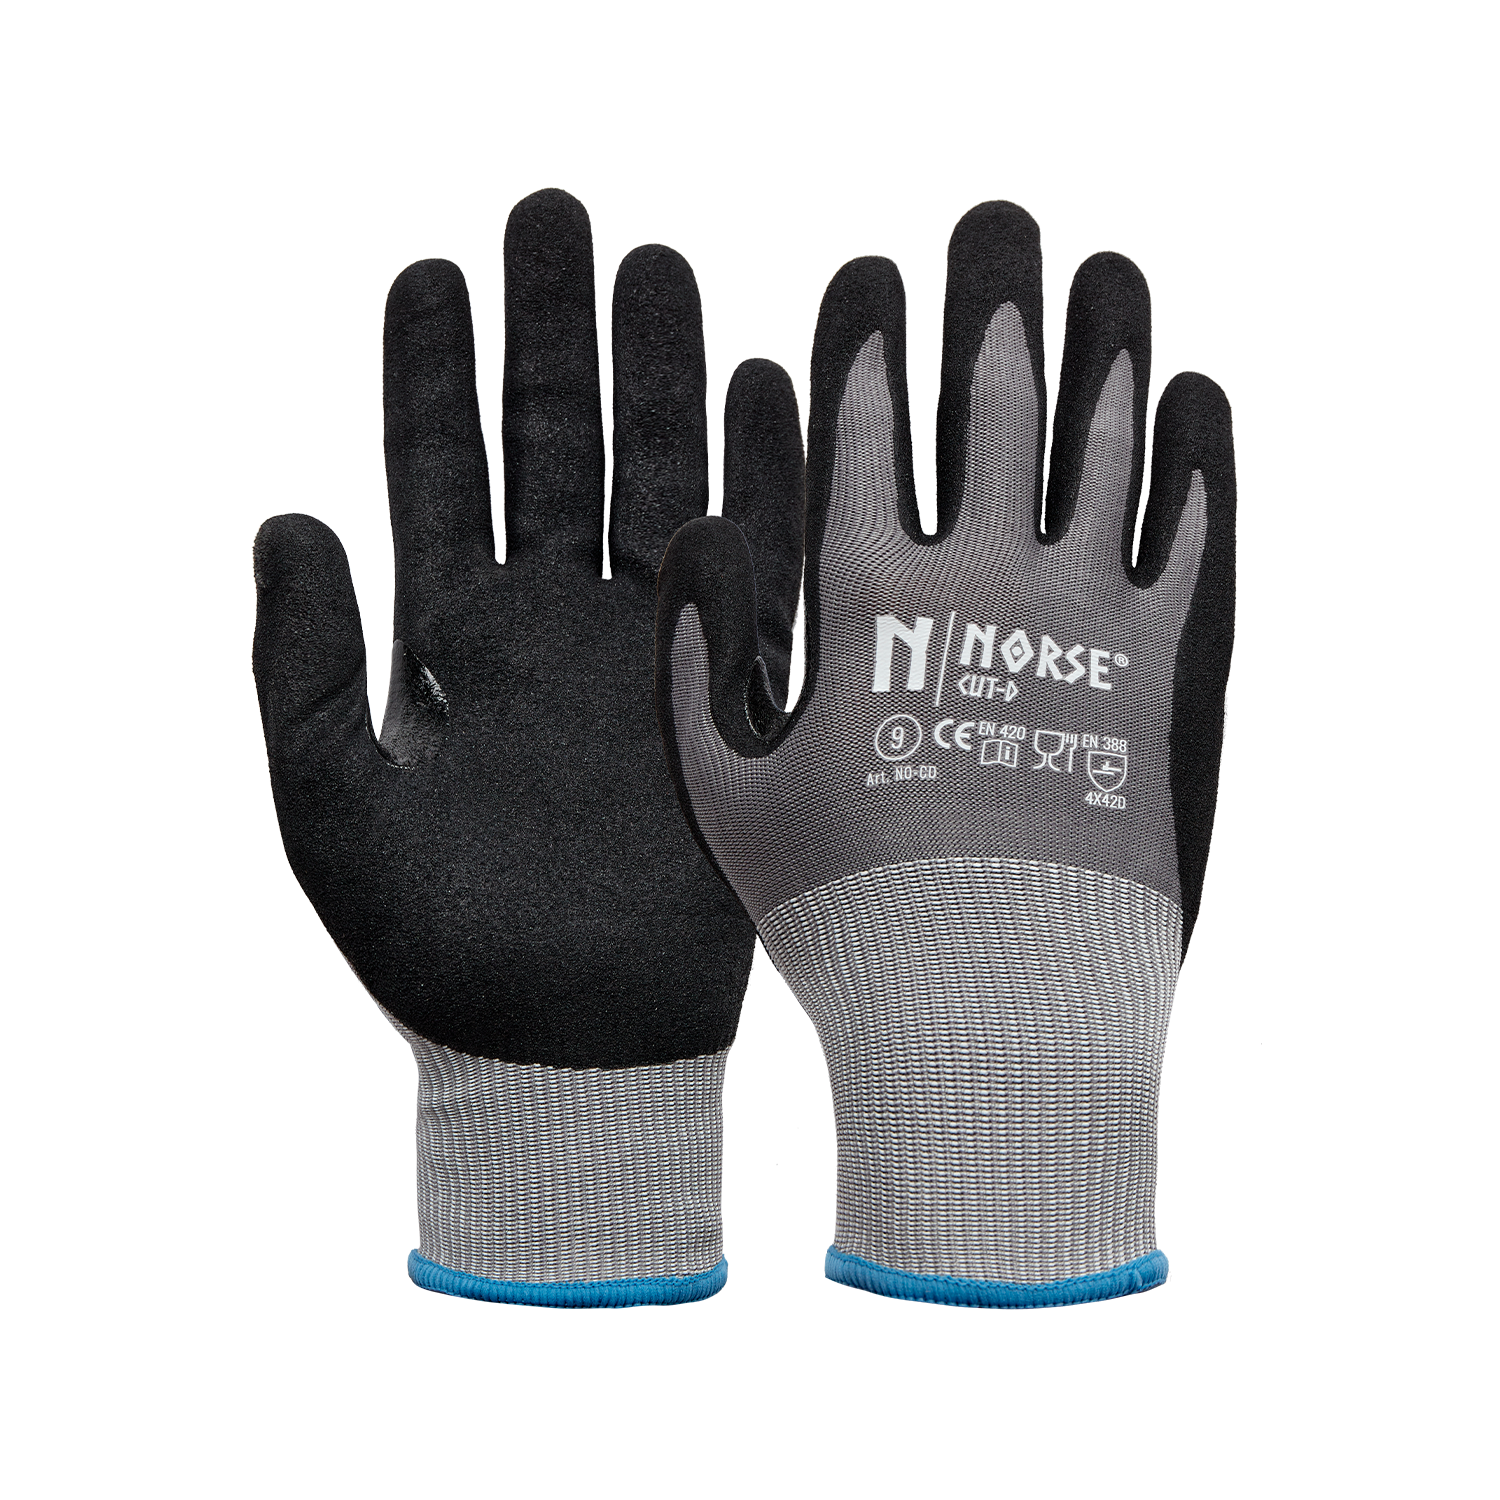 NORSE Cut-D cut-resistant assembly gloves size 6